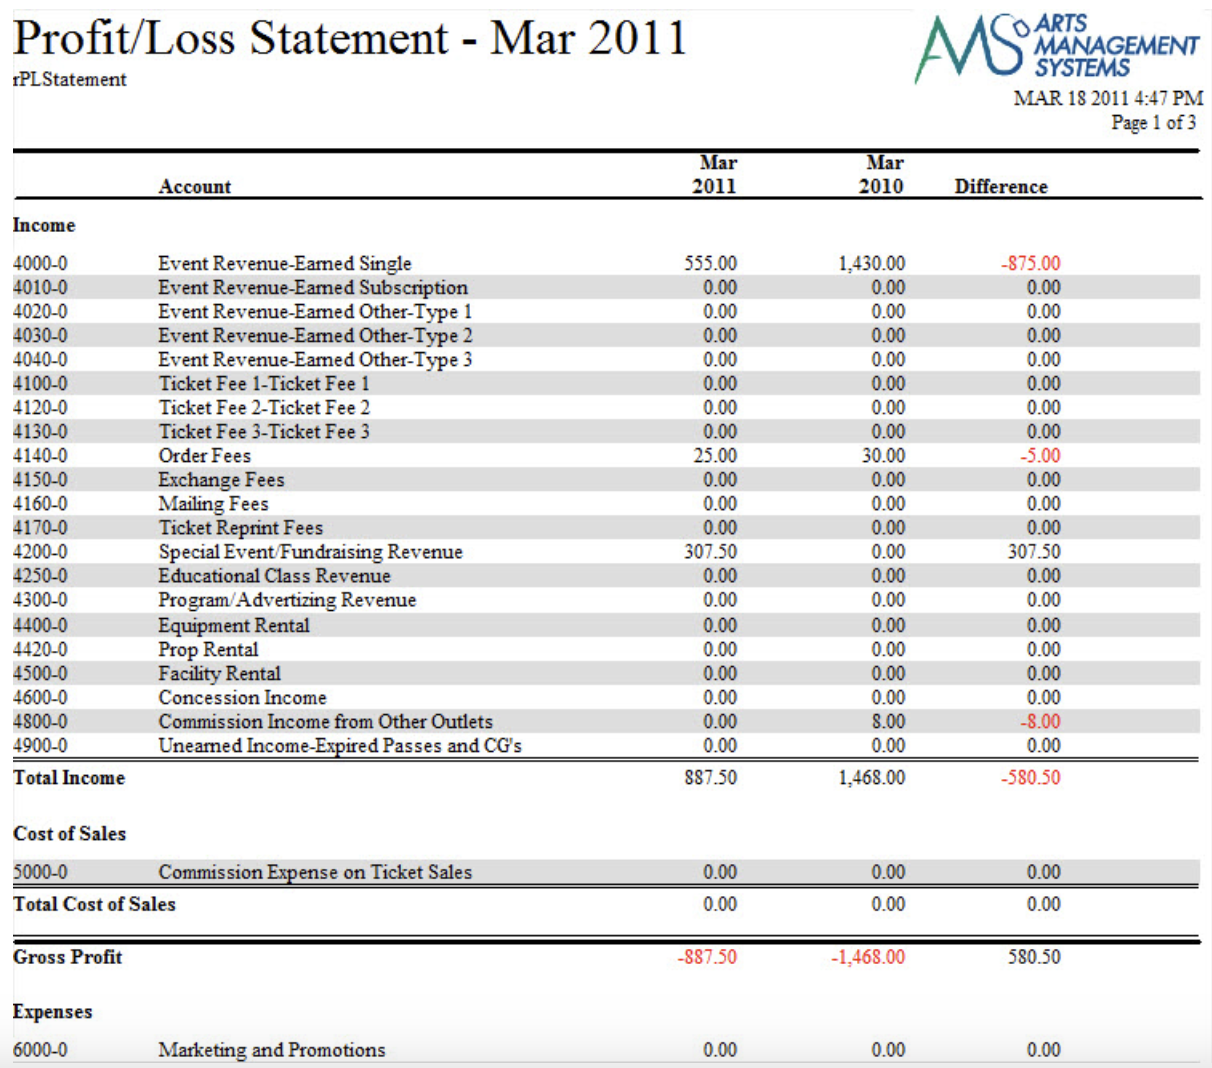 Financial Statements - Profit/Loss